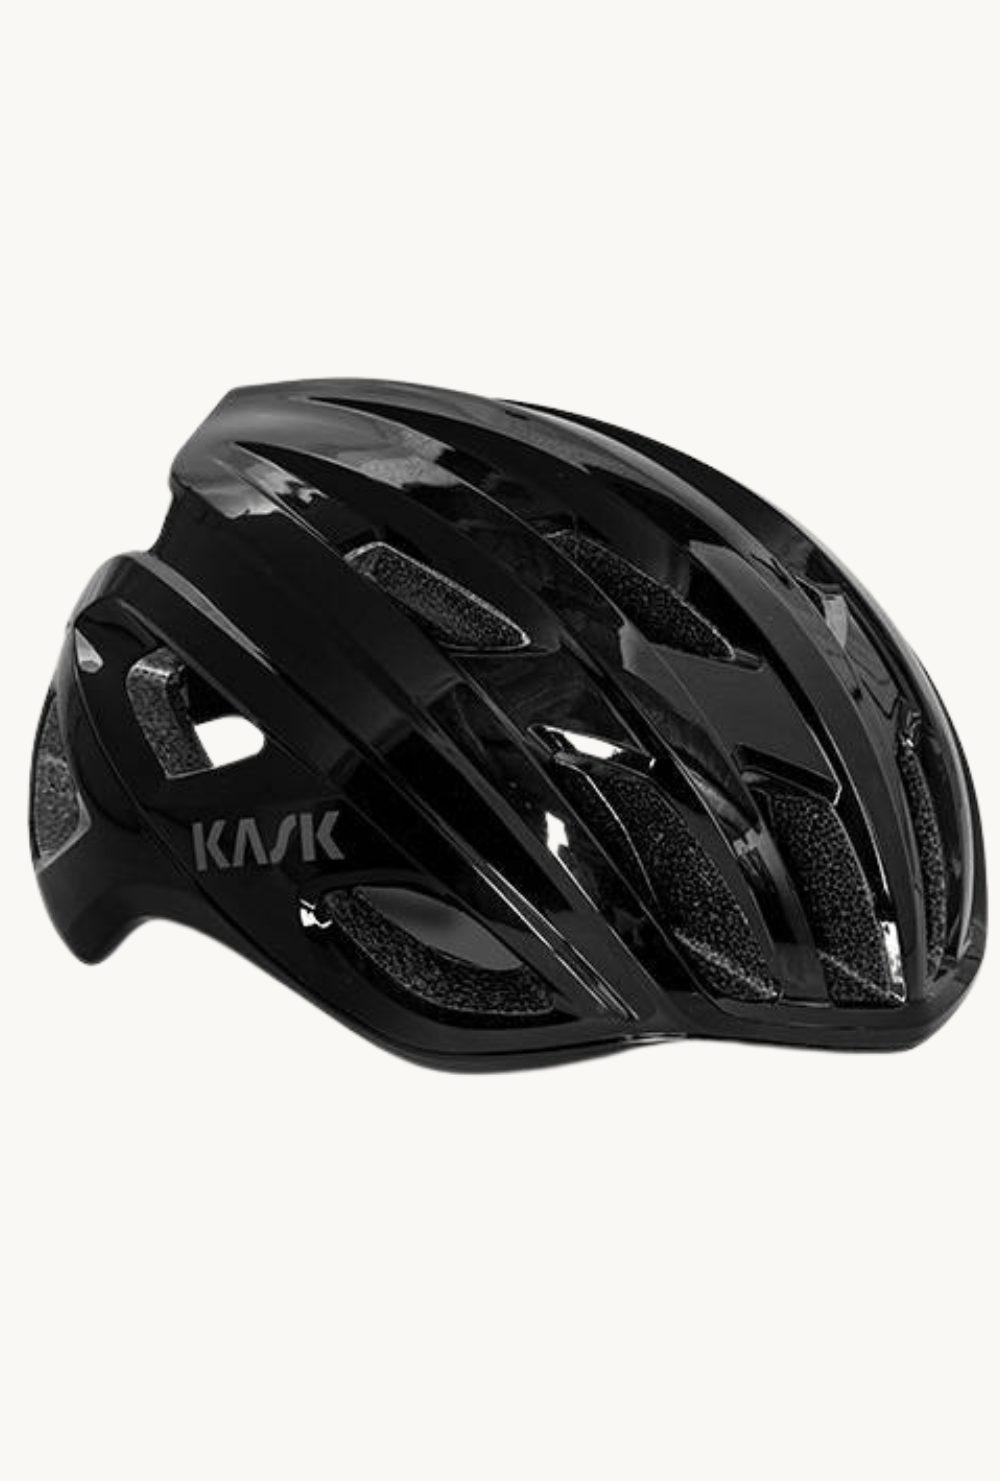 Helmet - Kask Mojito Blackmedium / Black